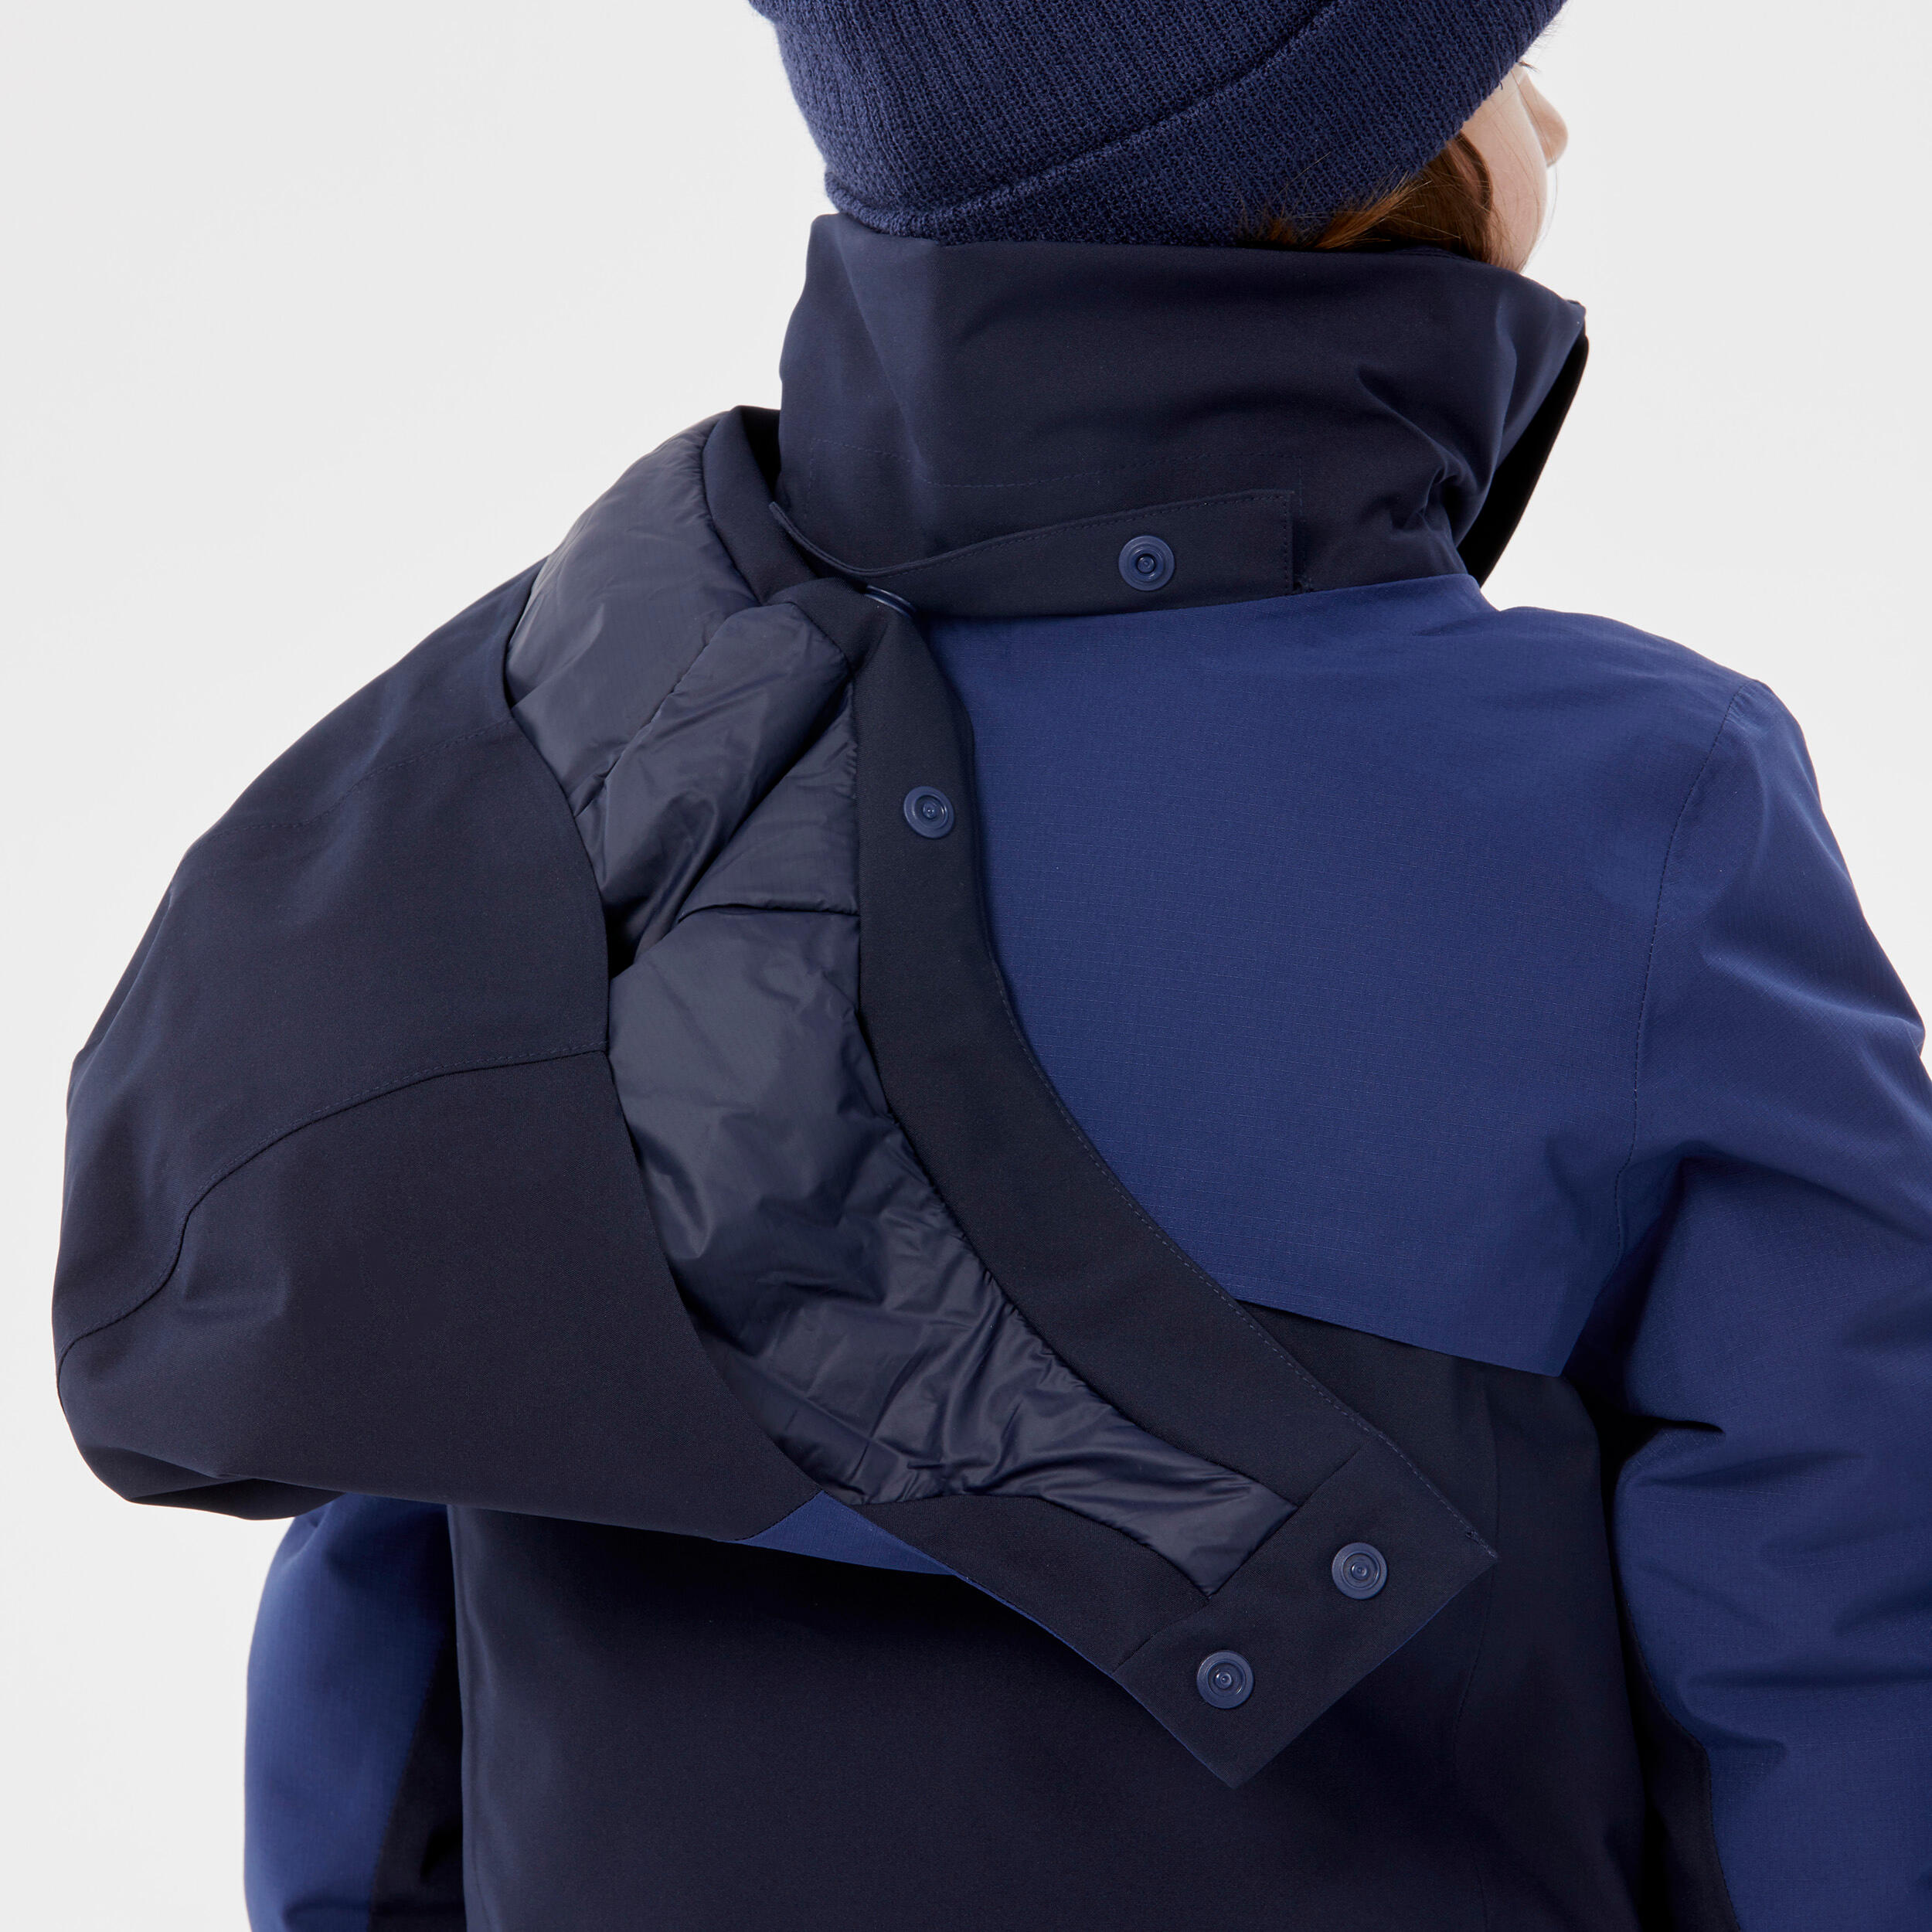 Kids’ warm and waterproof ski jacket 900 - blue 8/13